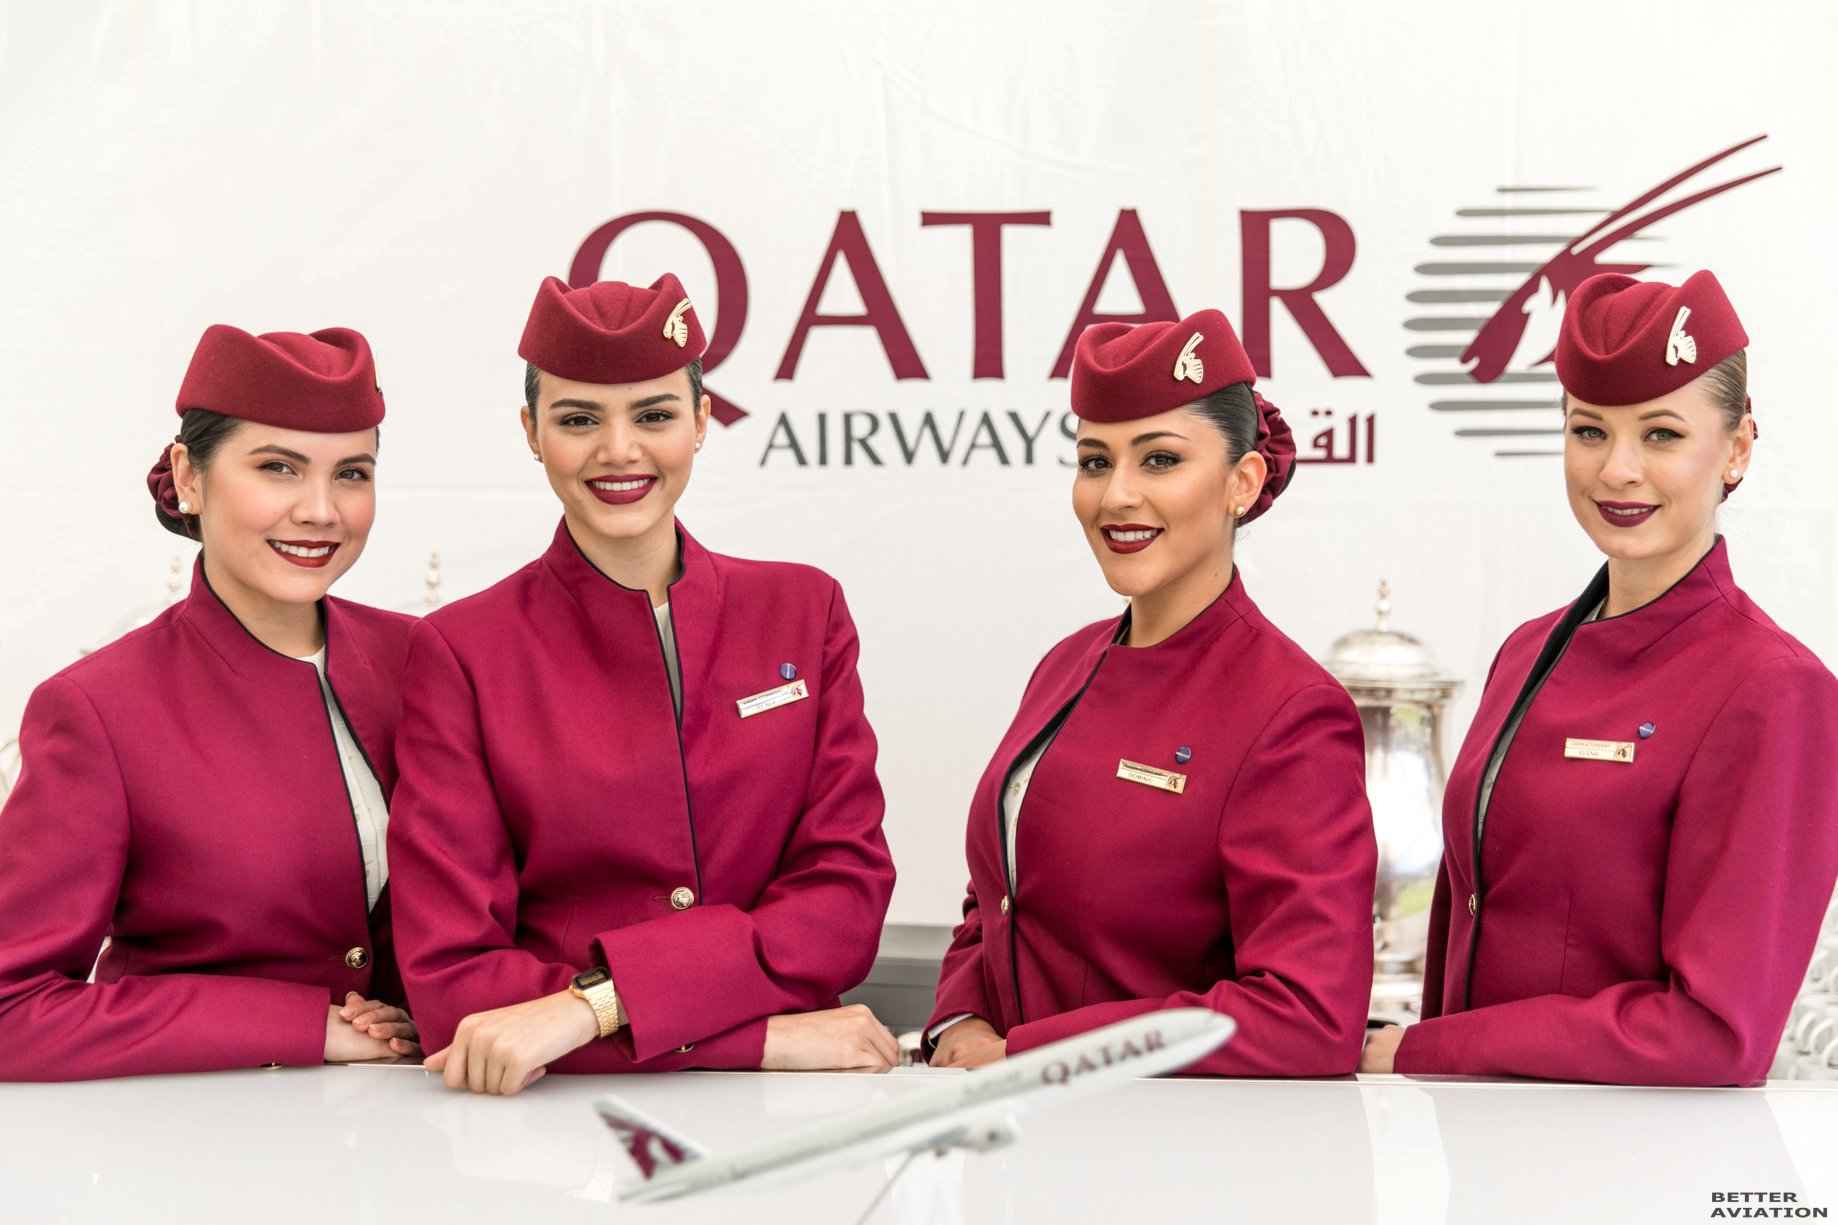 Катар это в медицине. Катар авиакомпания бортпроводники. Qatar Airways Бортпроводник. Qatar Airlines форма стюардесс. Форма стюардесс в авиалинии Катара.